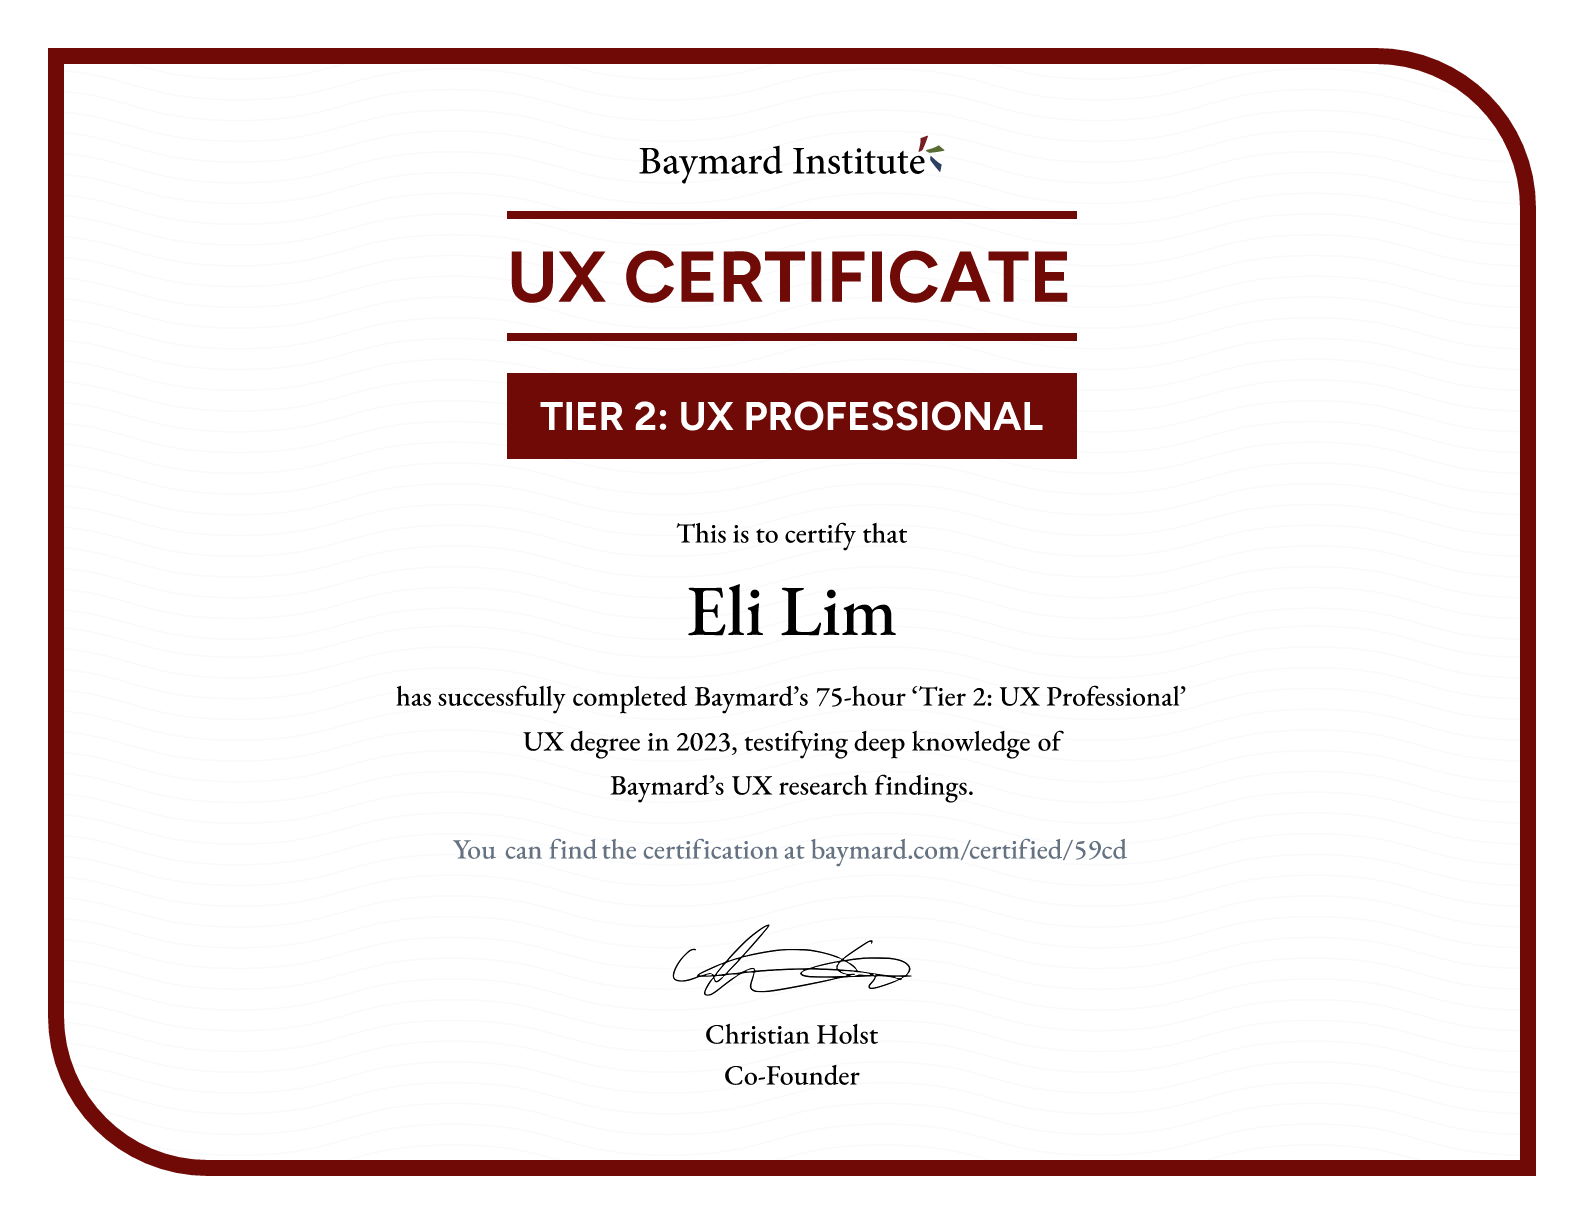 Eli Lim’s certificate